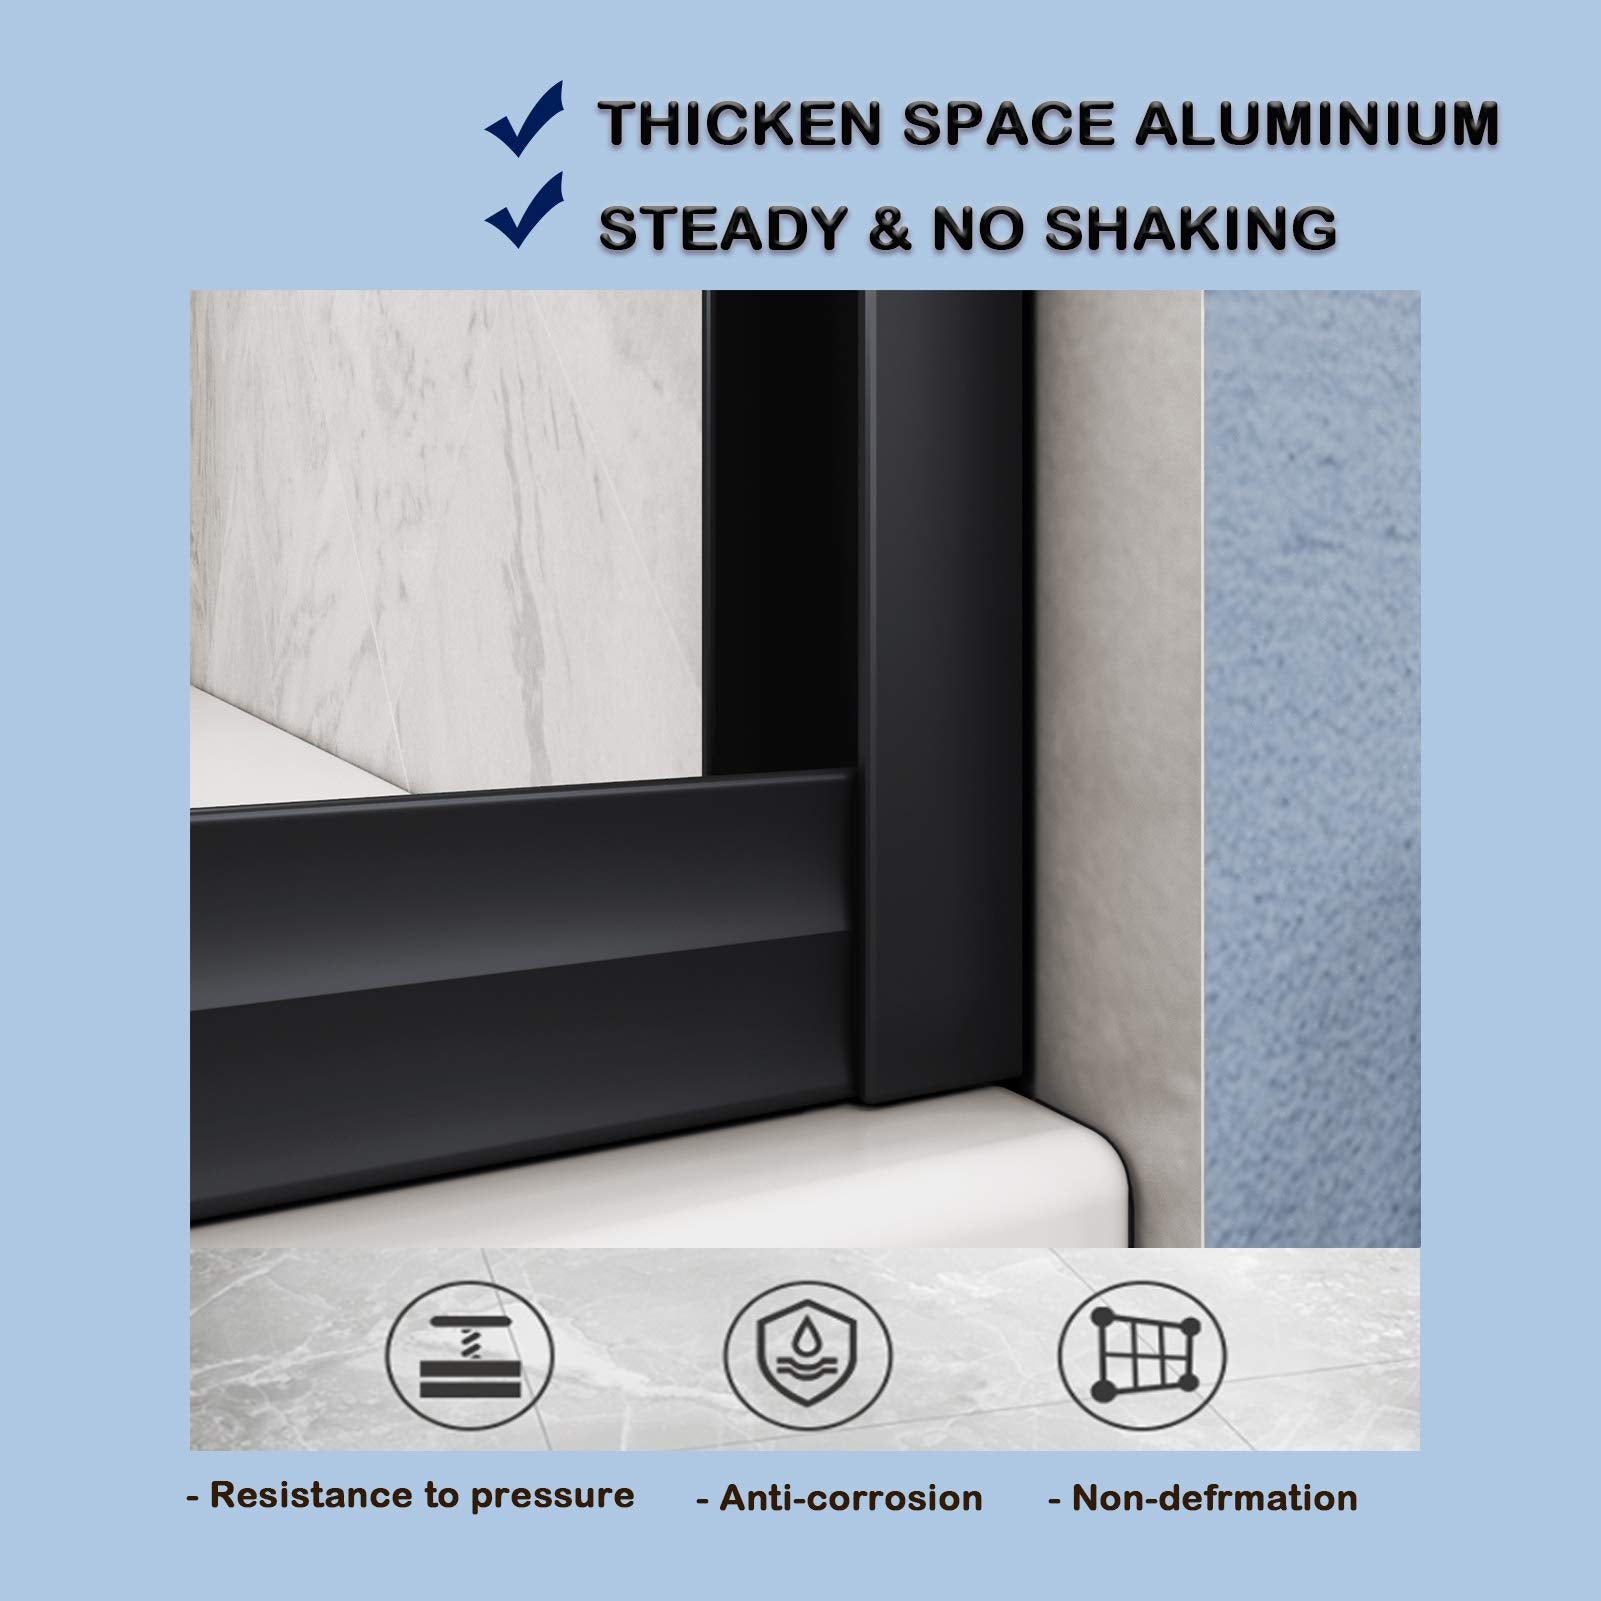 thicken space aluminium, steady & no shaking